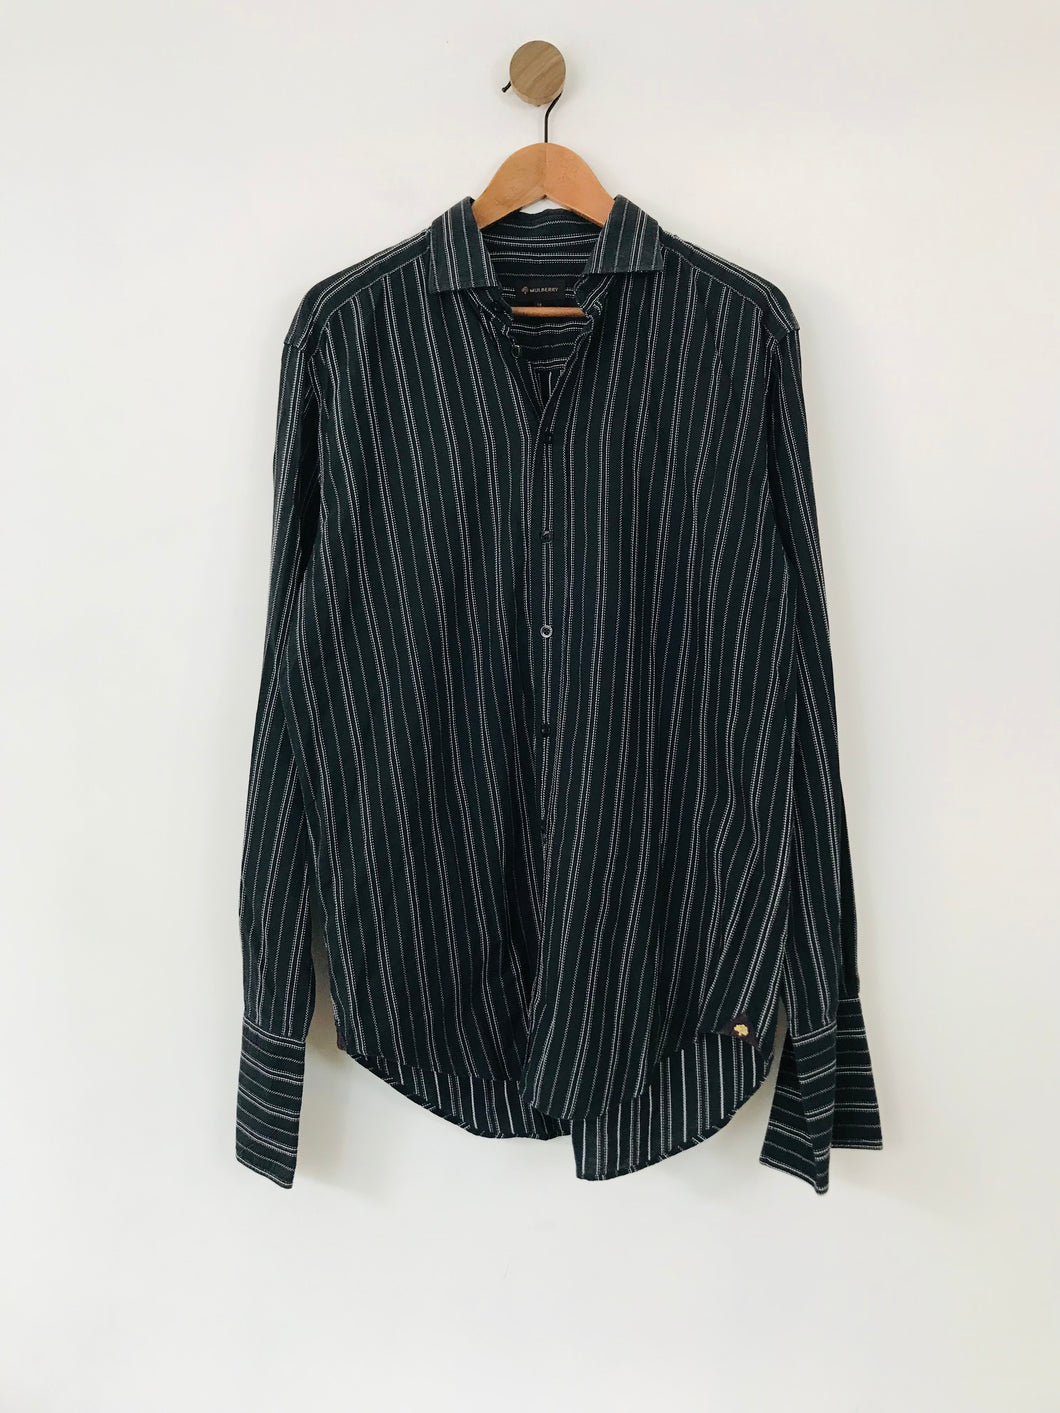 Mulberry Men's Striped Button-Up Shirt | 16 41 | Black